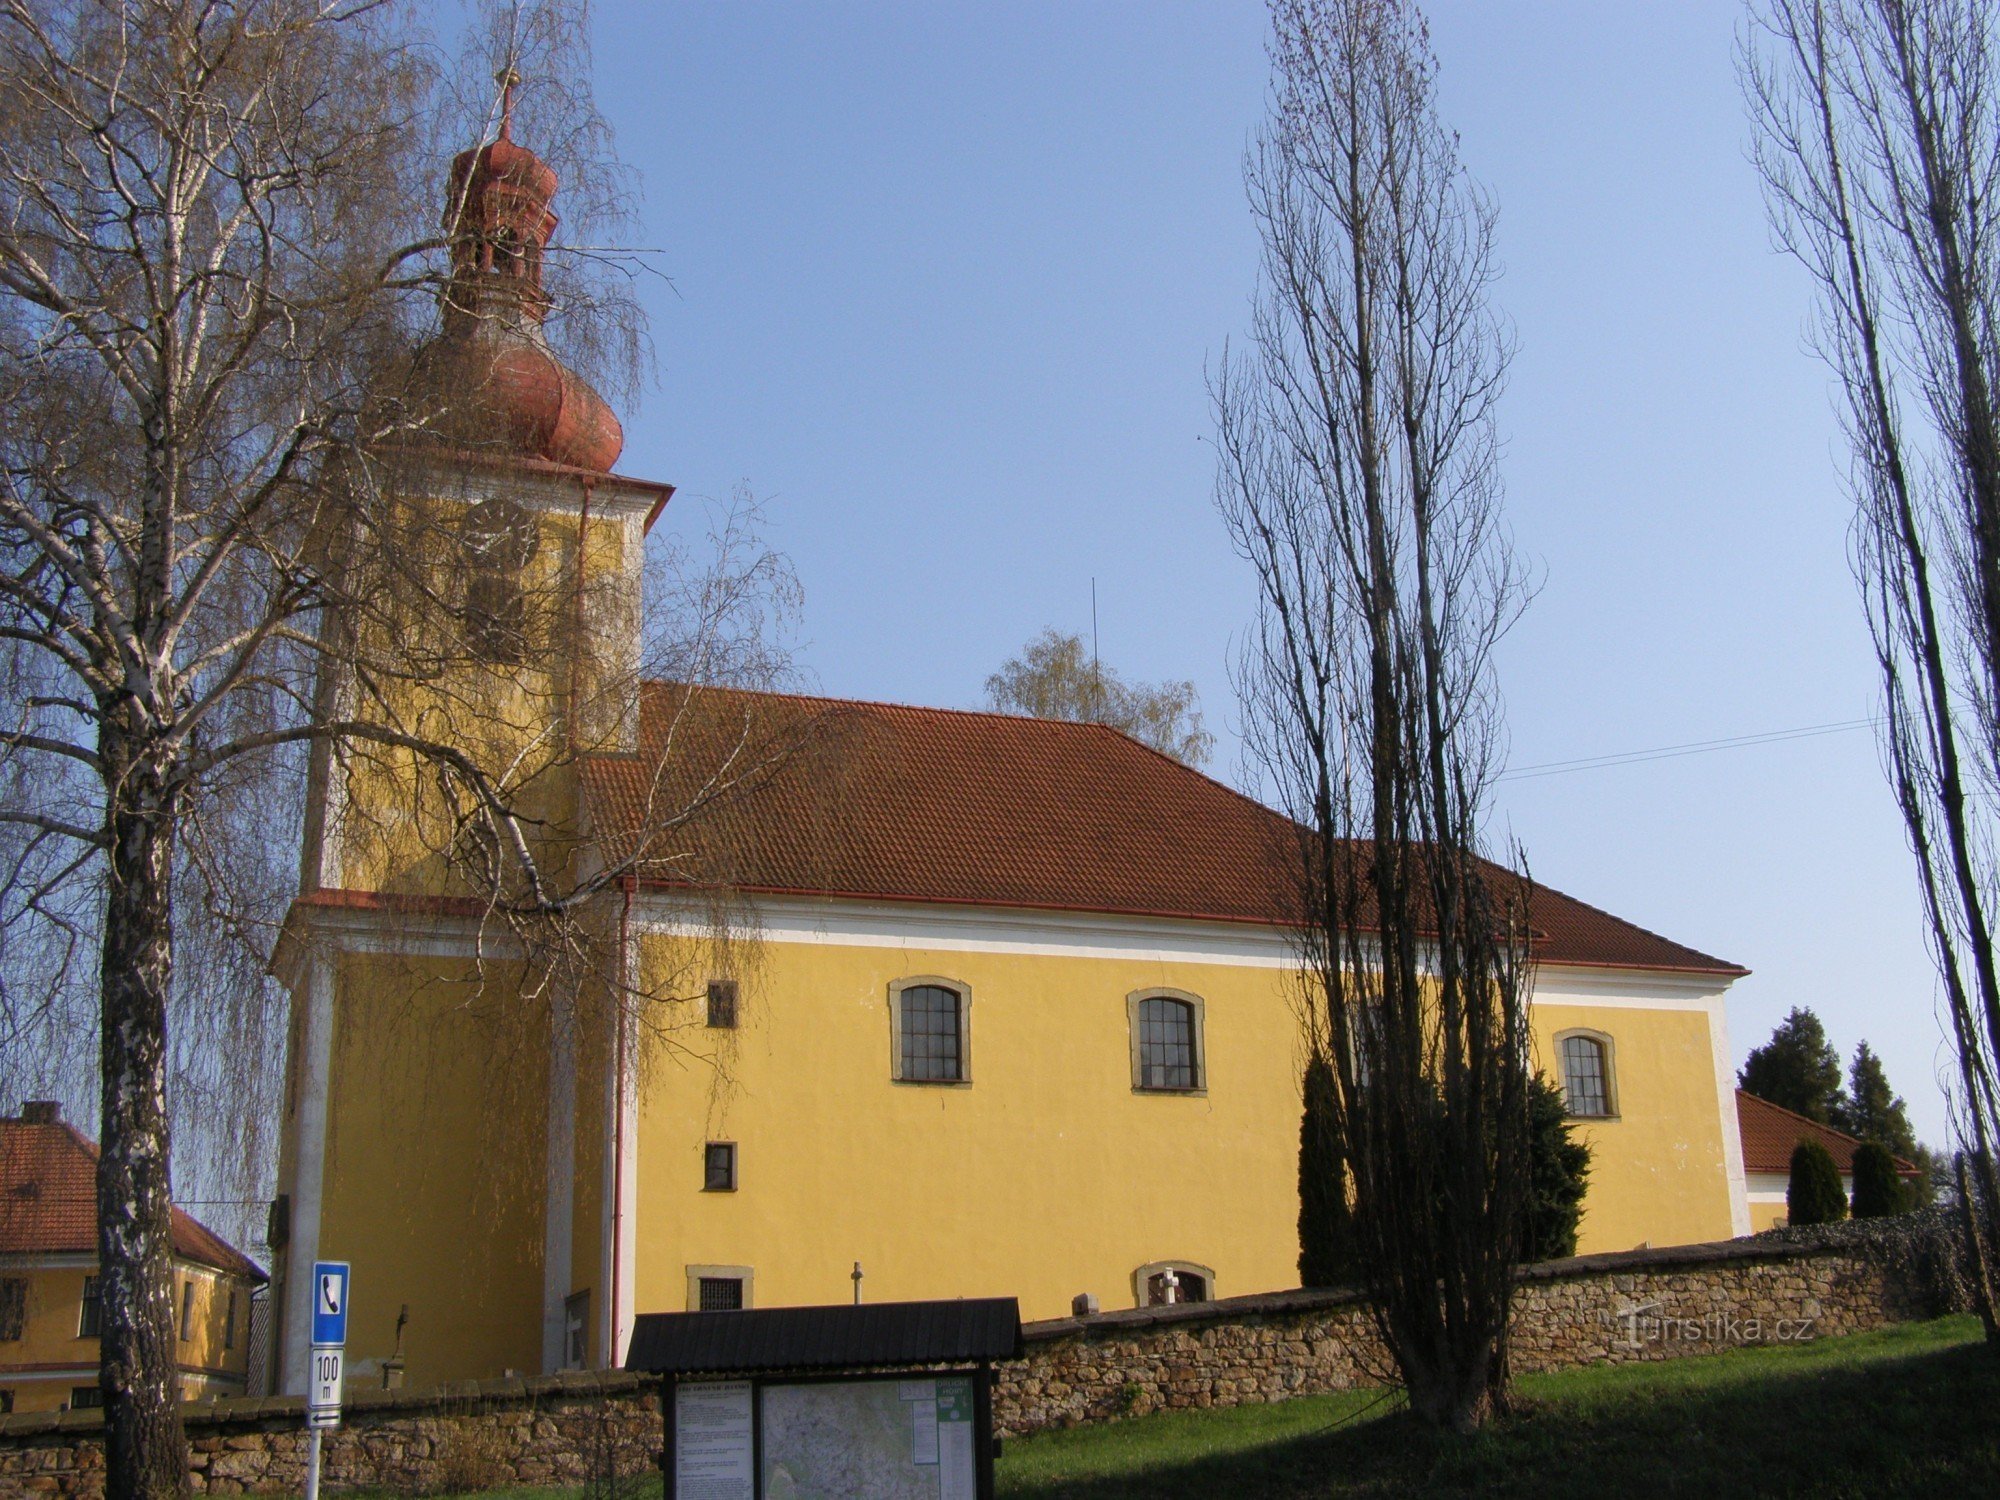 Rybná nad Zdobnicí - biserica Sf. Jakub